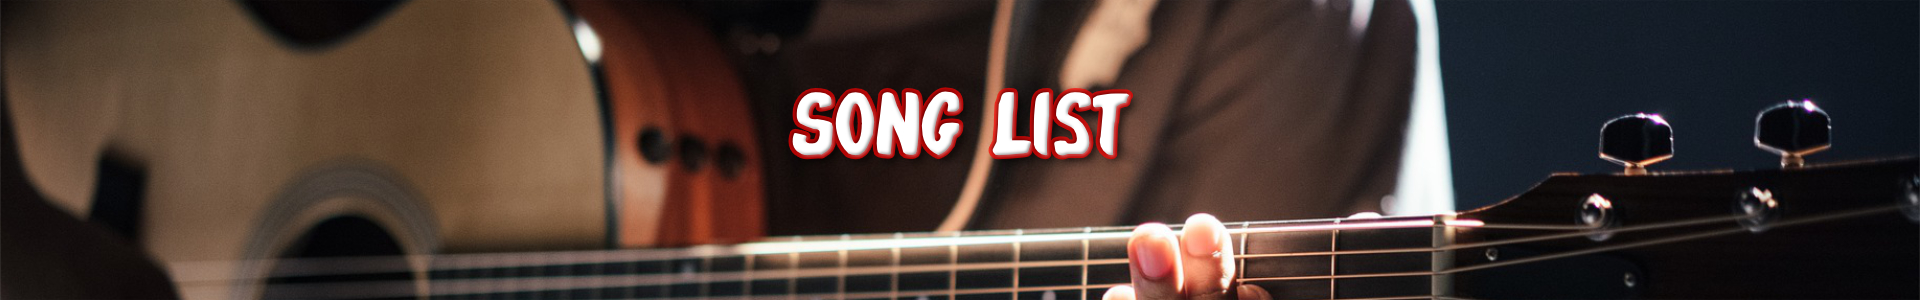 Song List Header Image